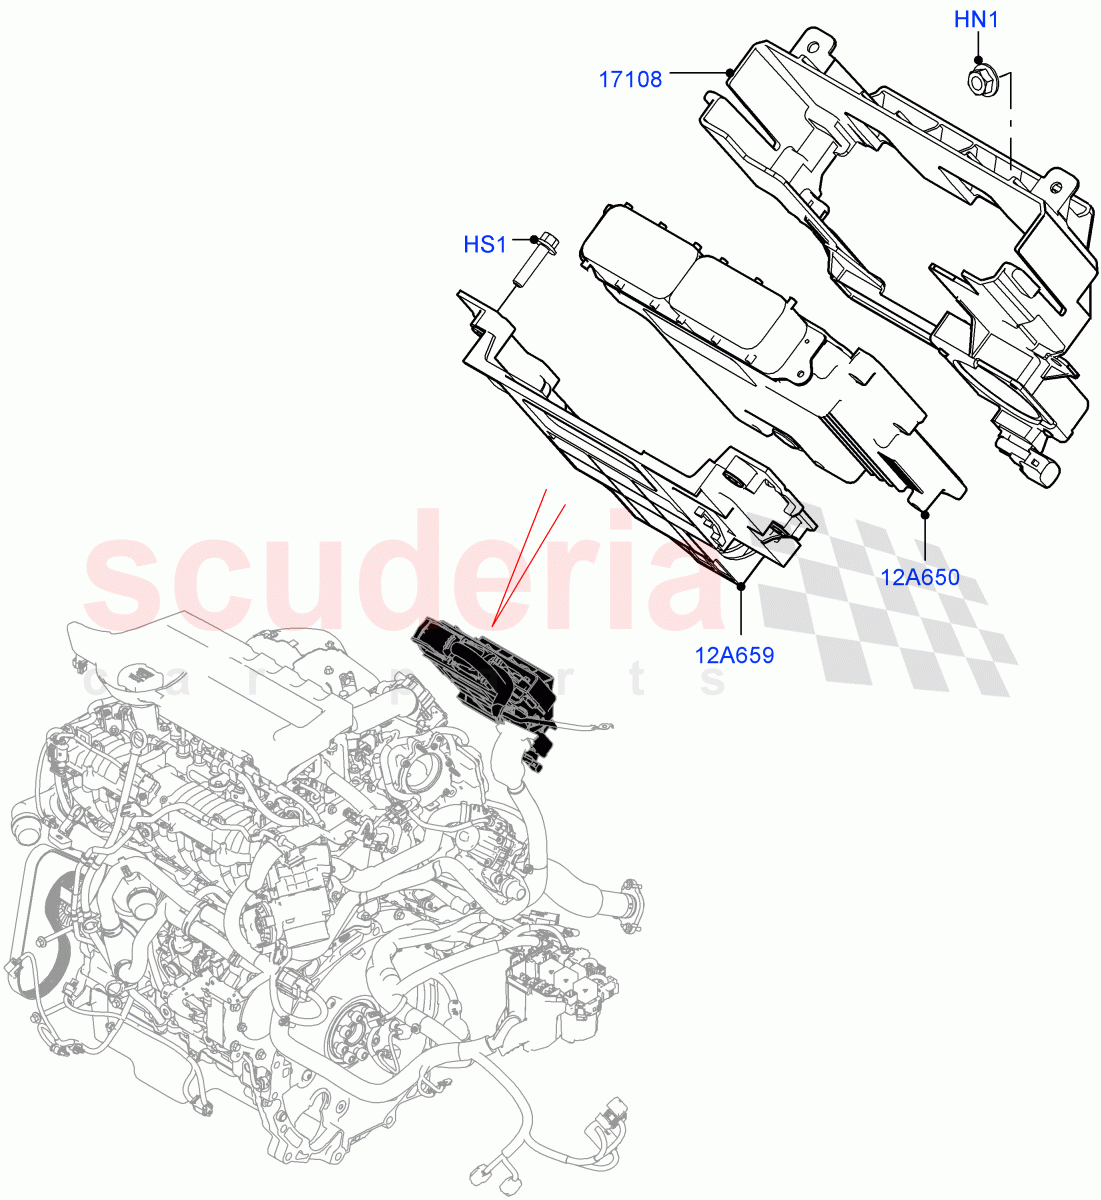 Engine Modules And Sensors(2.0L AJ20P4 Petrol E100 PTA,Halewood (UK),2.0L AJ20P4 Petrol Mid PTA,2.0L AJ20P4 Petrol High PTA) of Land Rover Land Rover Discovery Sport (2015+) [2.0 Turbo Petrol AJ200P]